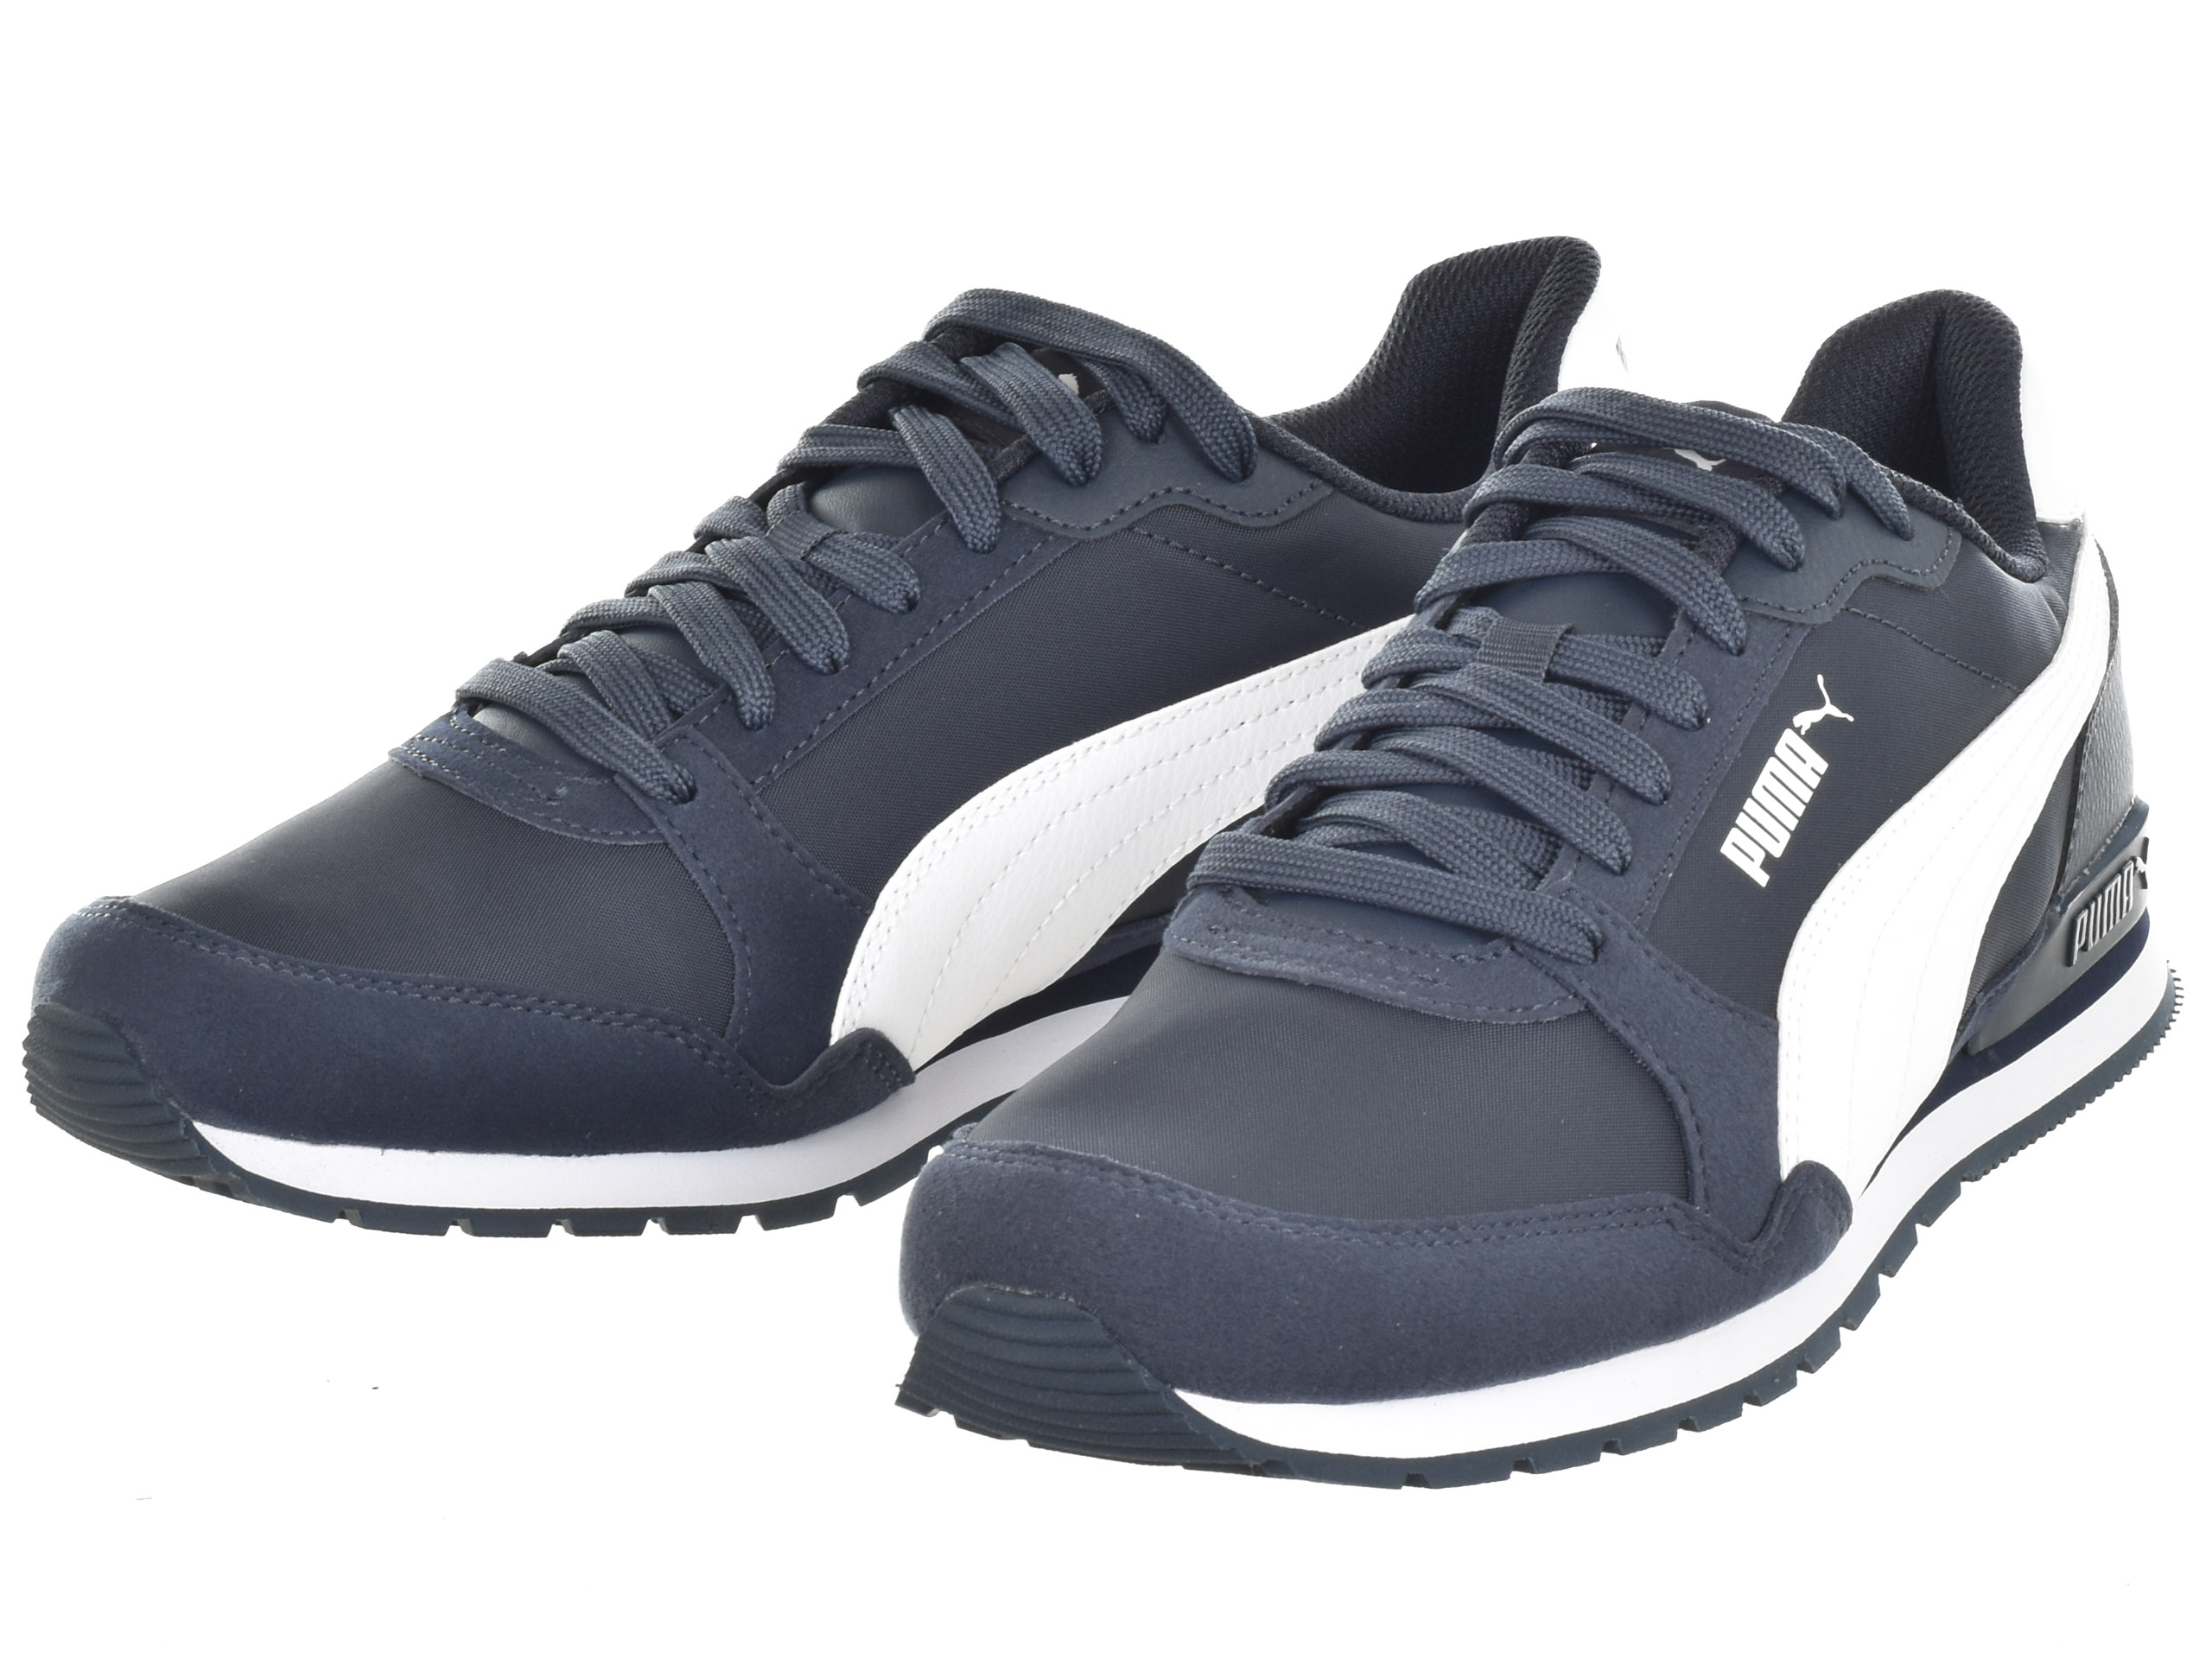 NL of [eng] Kicks St Mens 384857-02 a branded PUMA | supplier | Sport Puma V3 Granatowy trusted - footwear \\ Runner sports